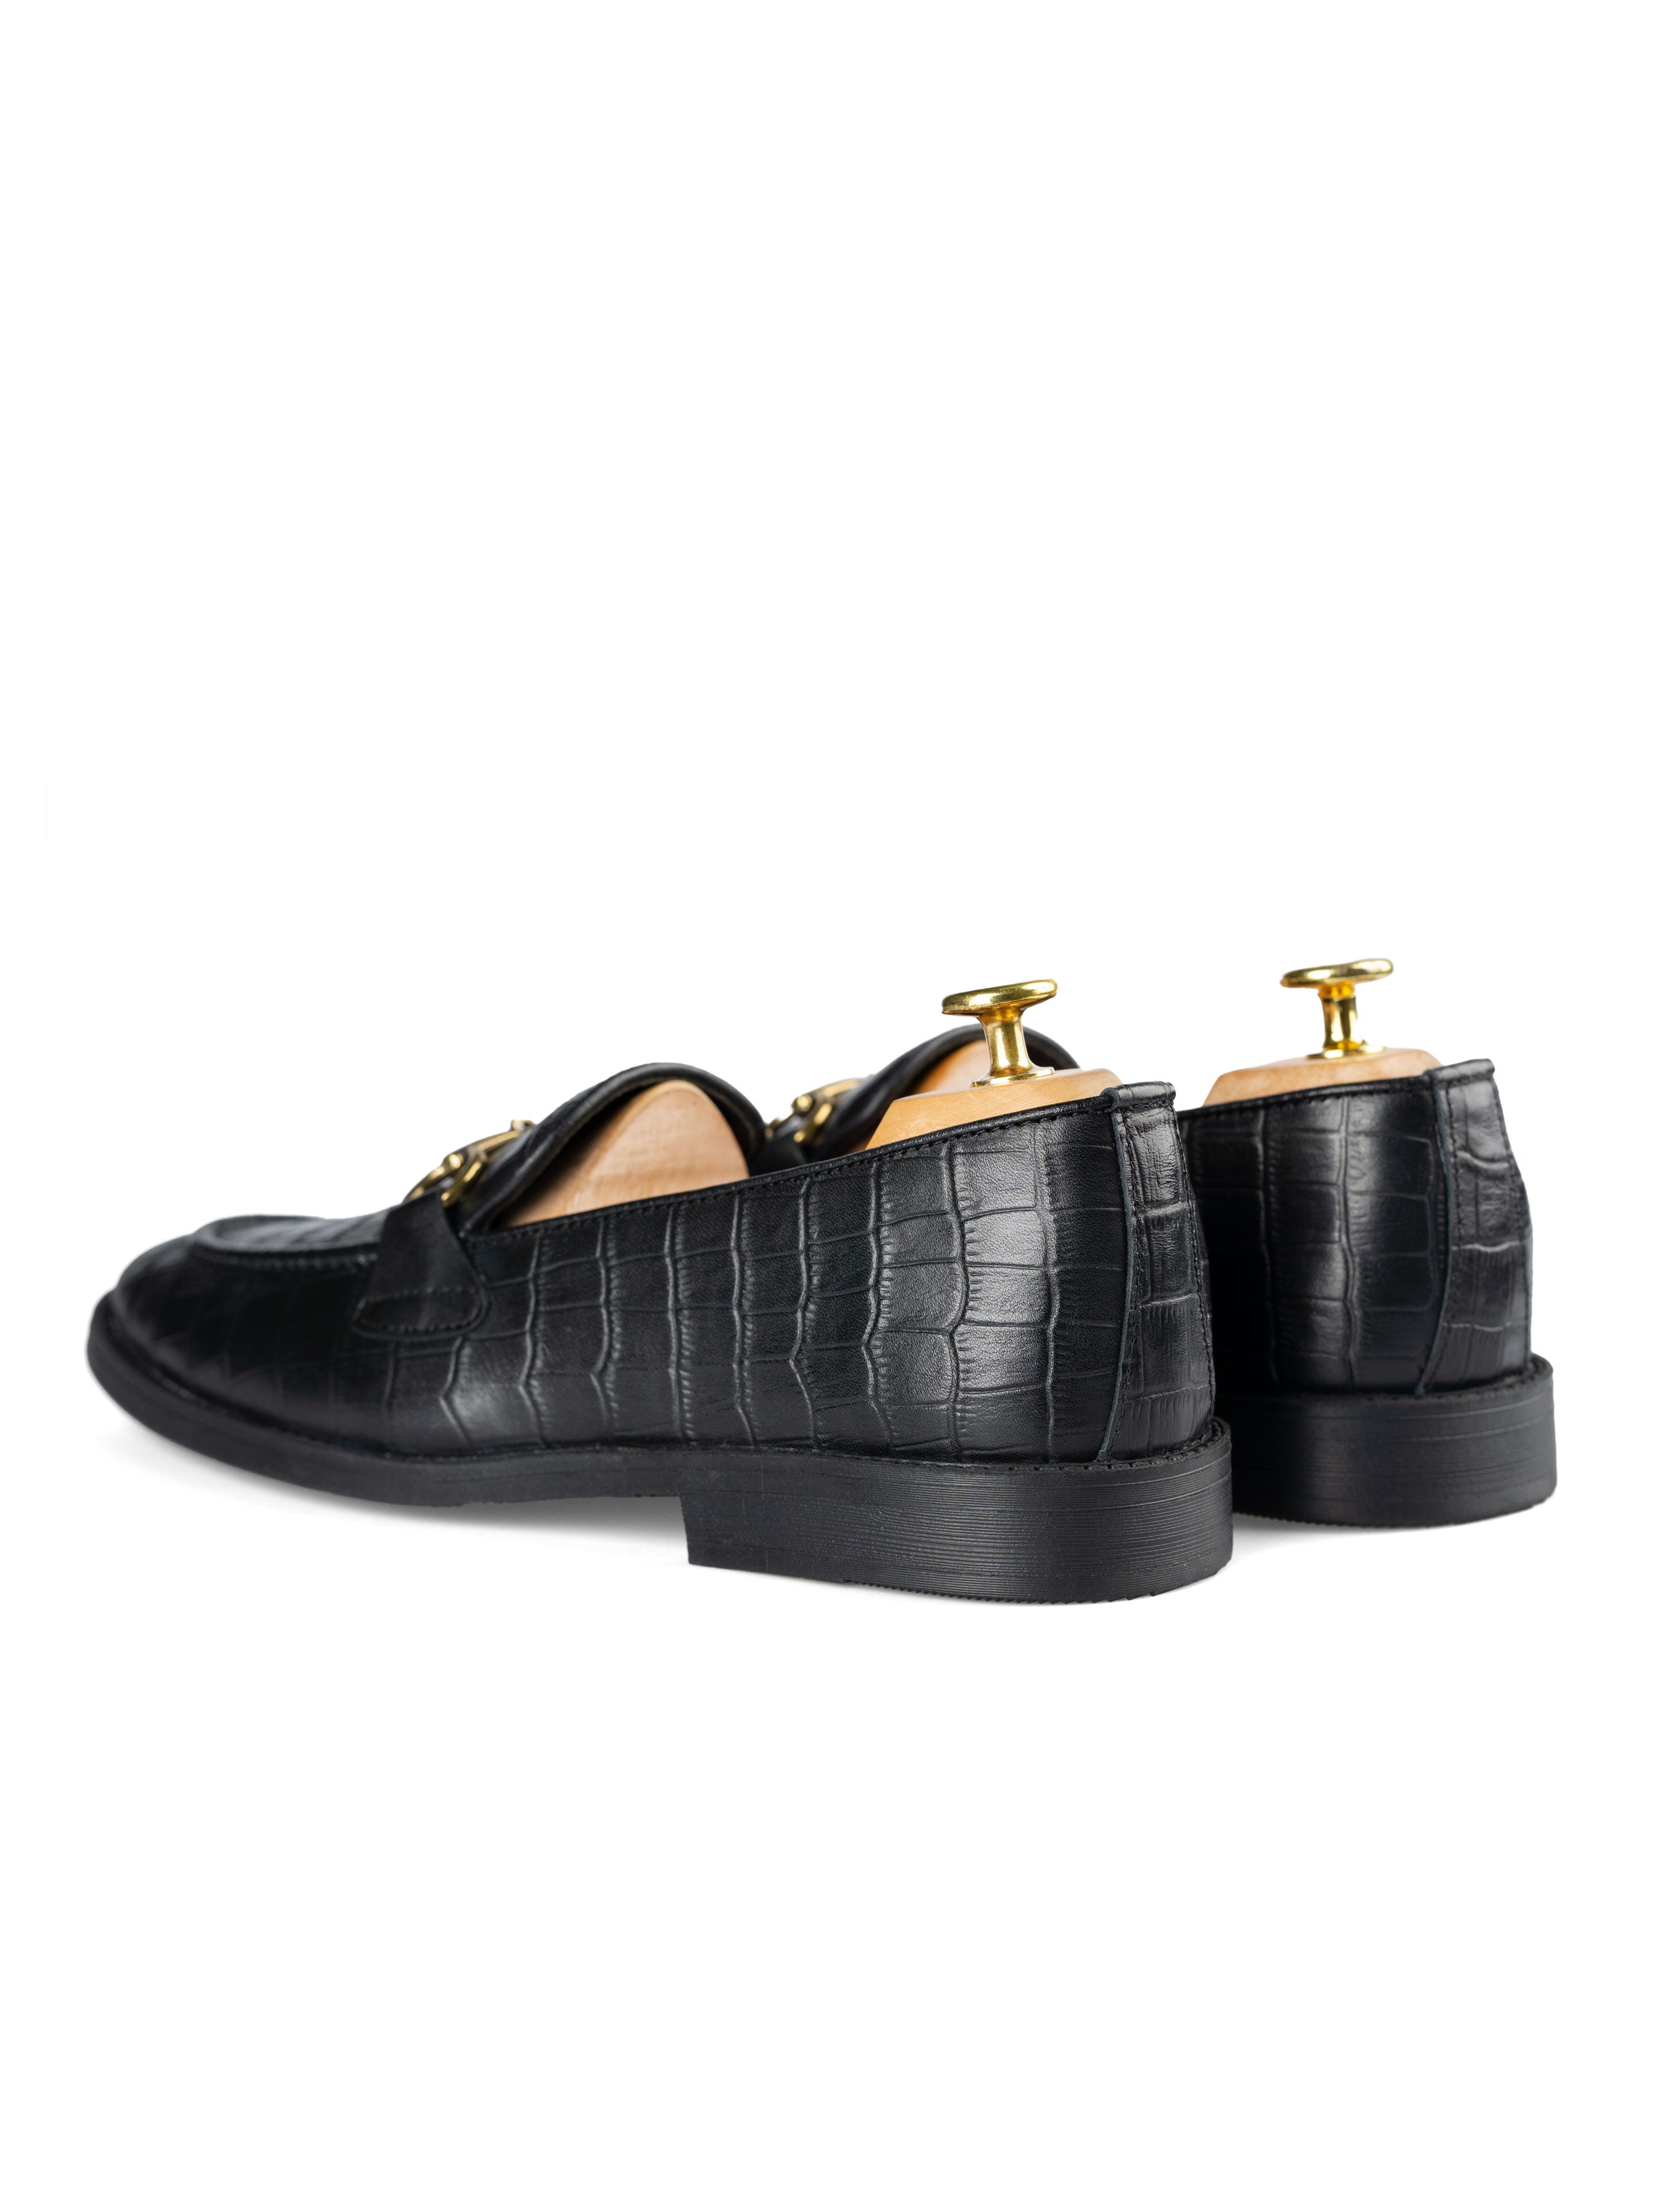 Horsebit Buckle Loafer - Black Croco Leather (Flexi-Sole) - Zeve Shoes